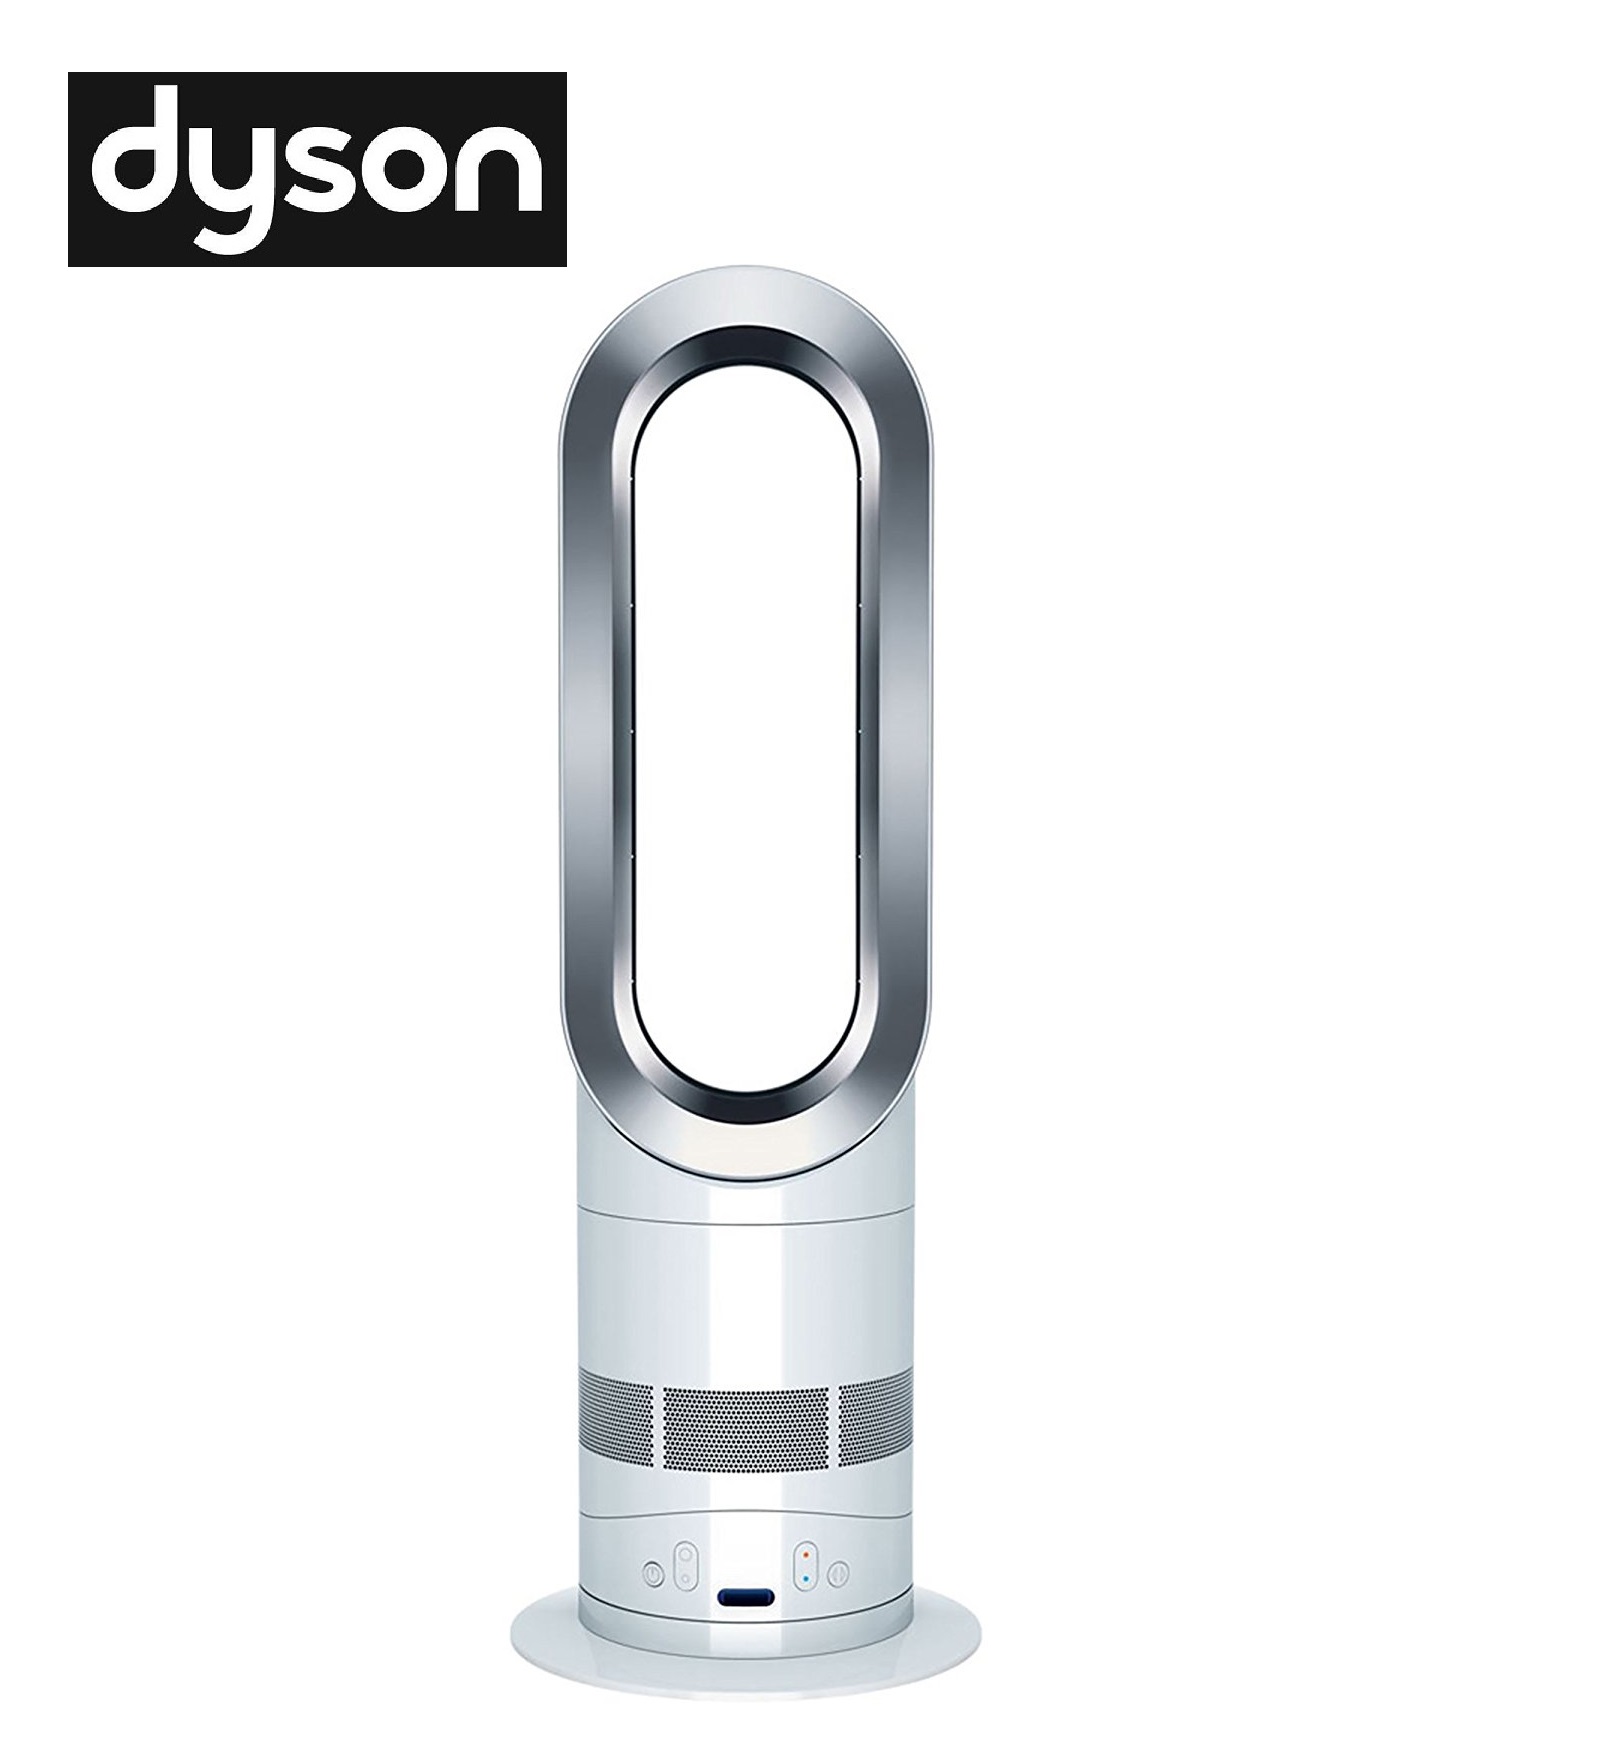 【dyson】ダイソン hot + cool ホワイト/シルバー他 |開業・開店・移転祝いにWebカタログギフト「オフィスギフト」